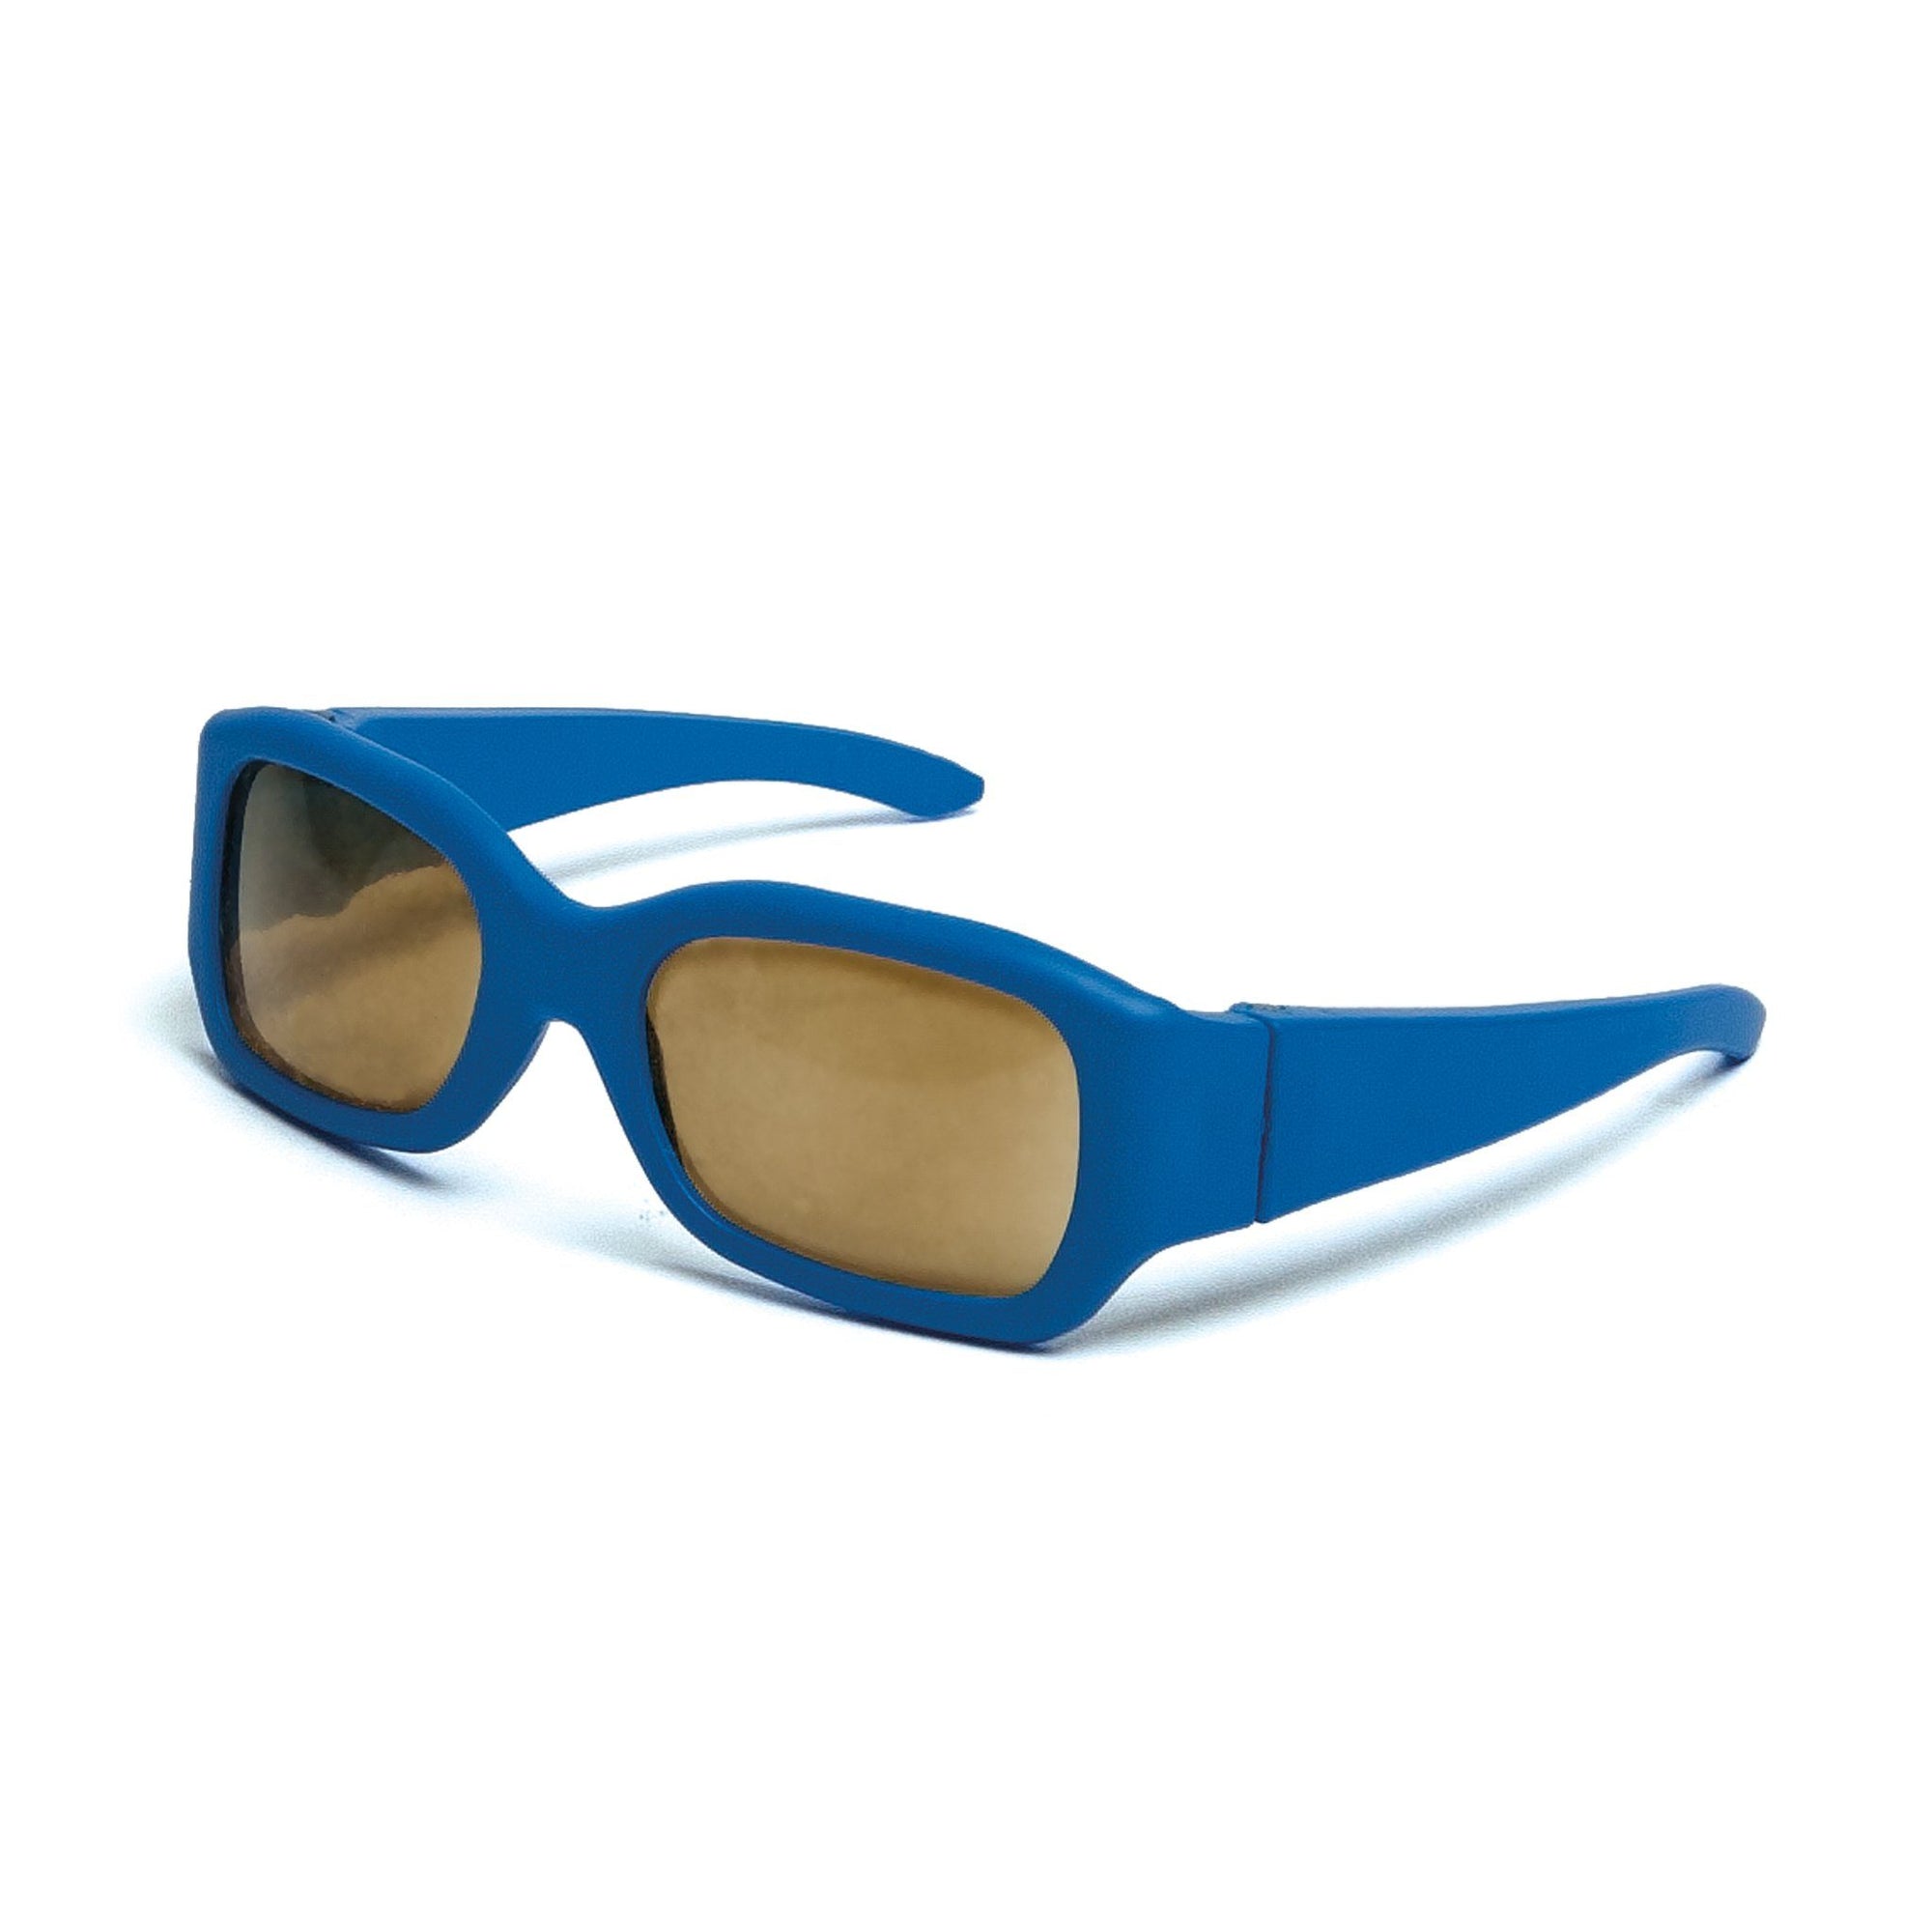 XKM140AA - Blue Sunglasses (unpackaged)